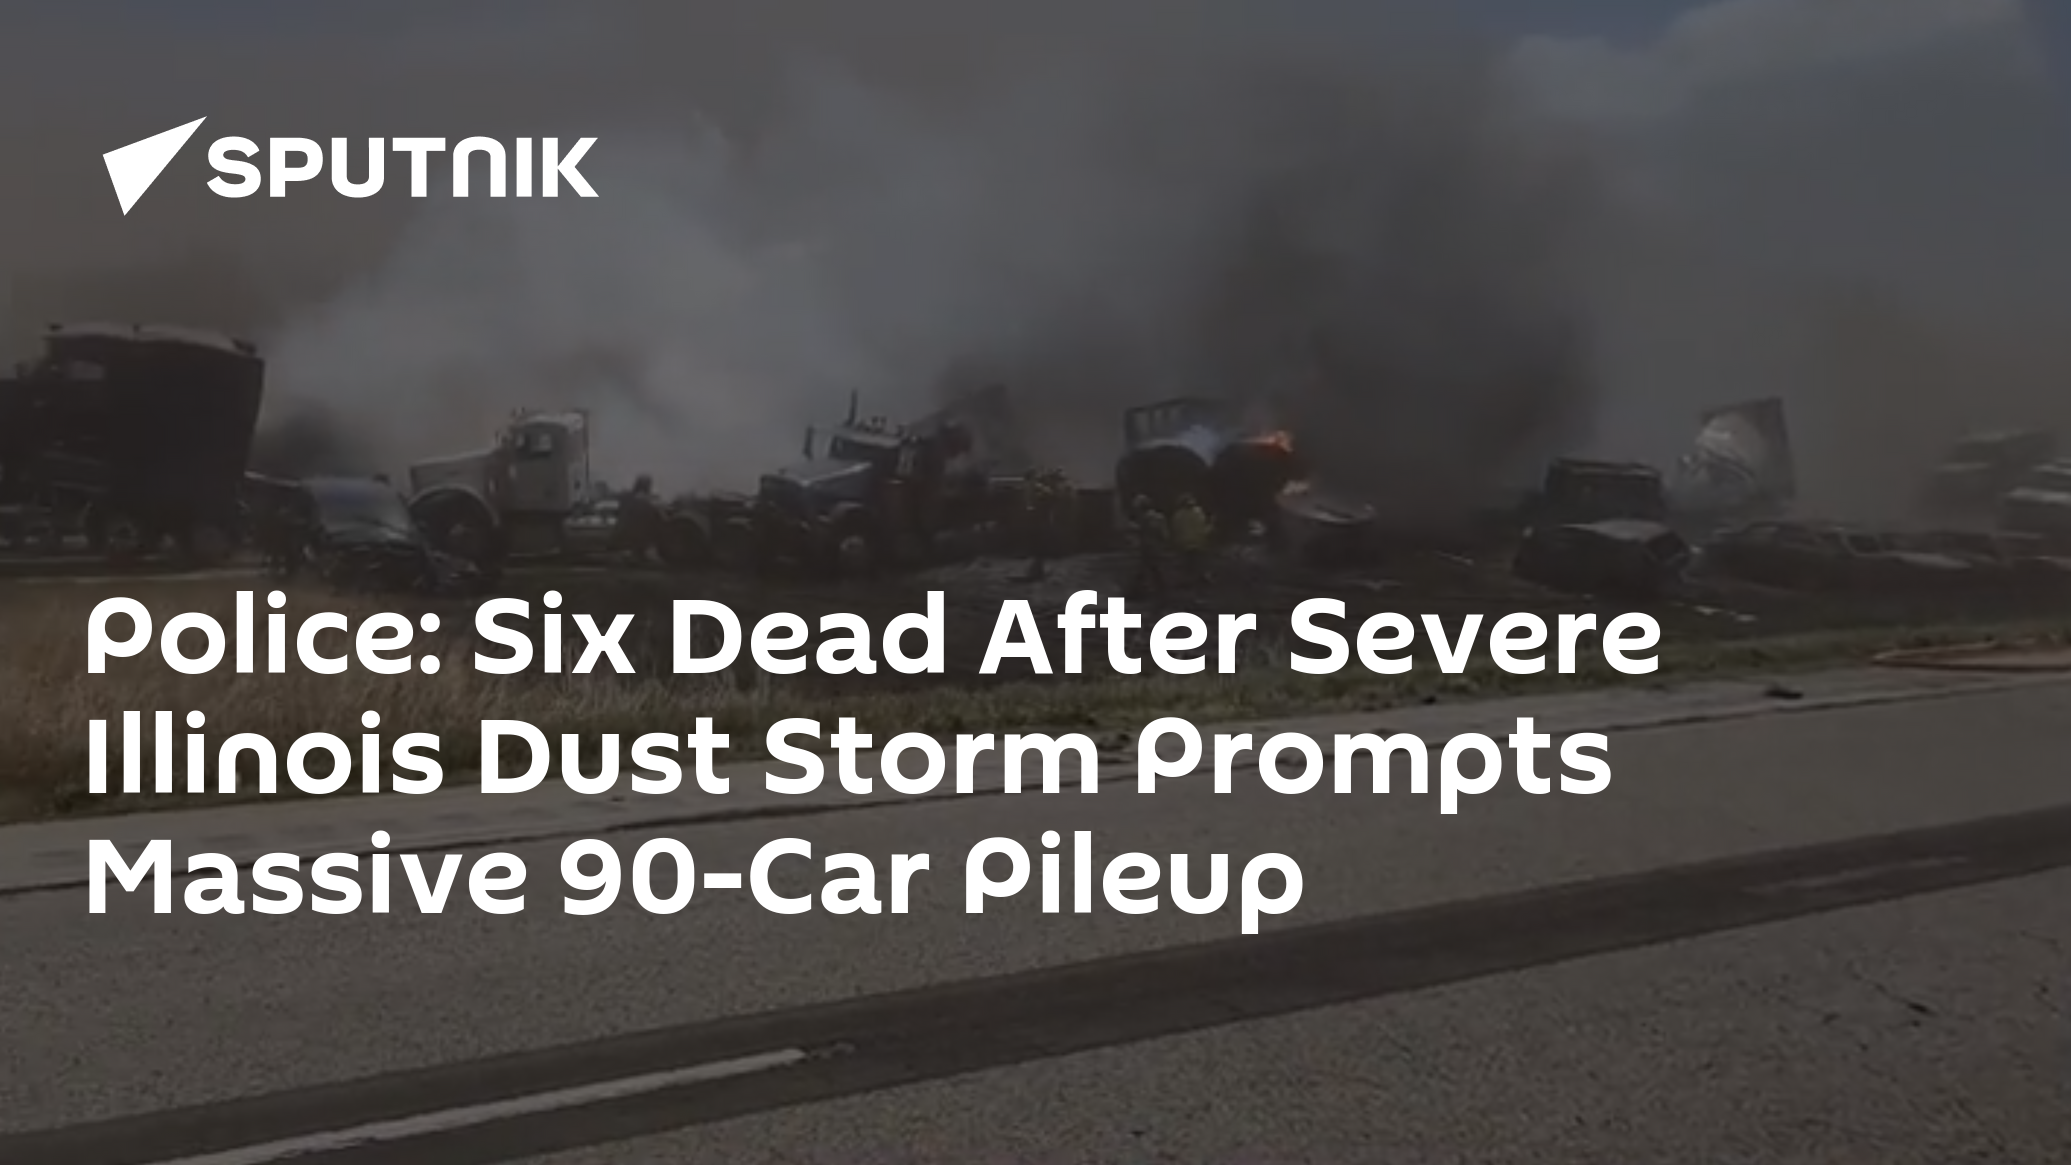 Police: Six Dead After Severe Illinois Dust Storm Prompts Massive 90-Car Pileup